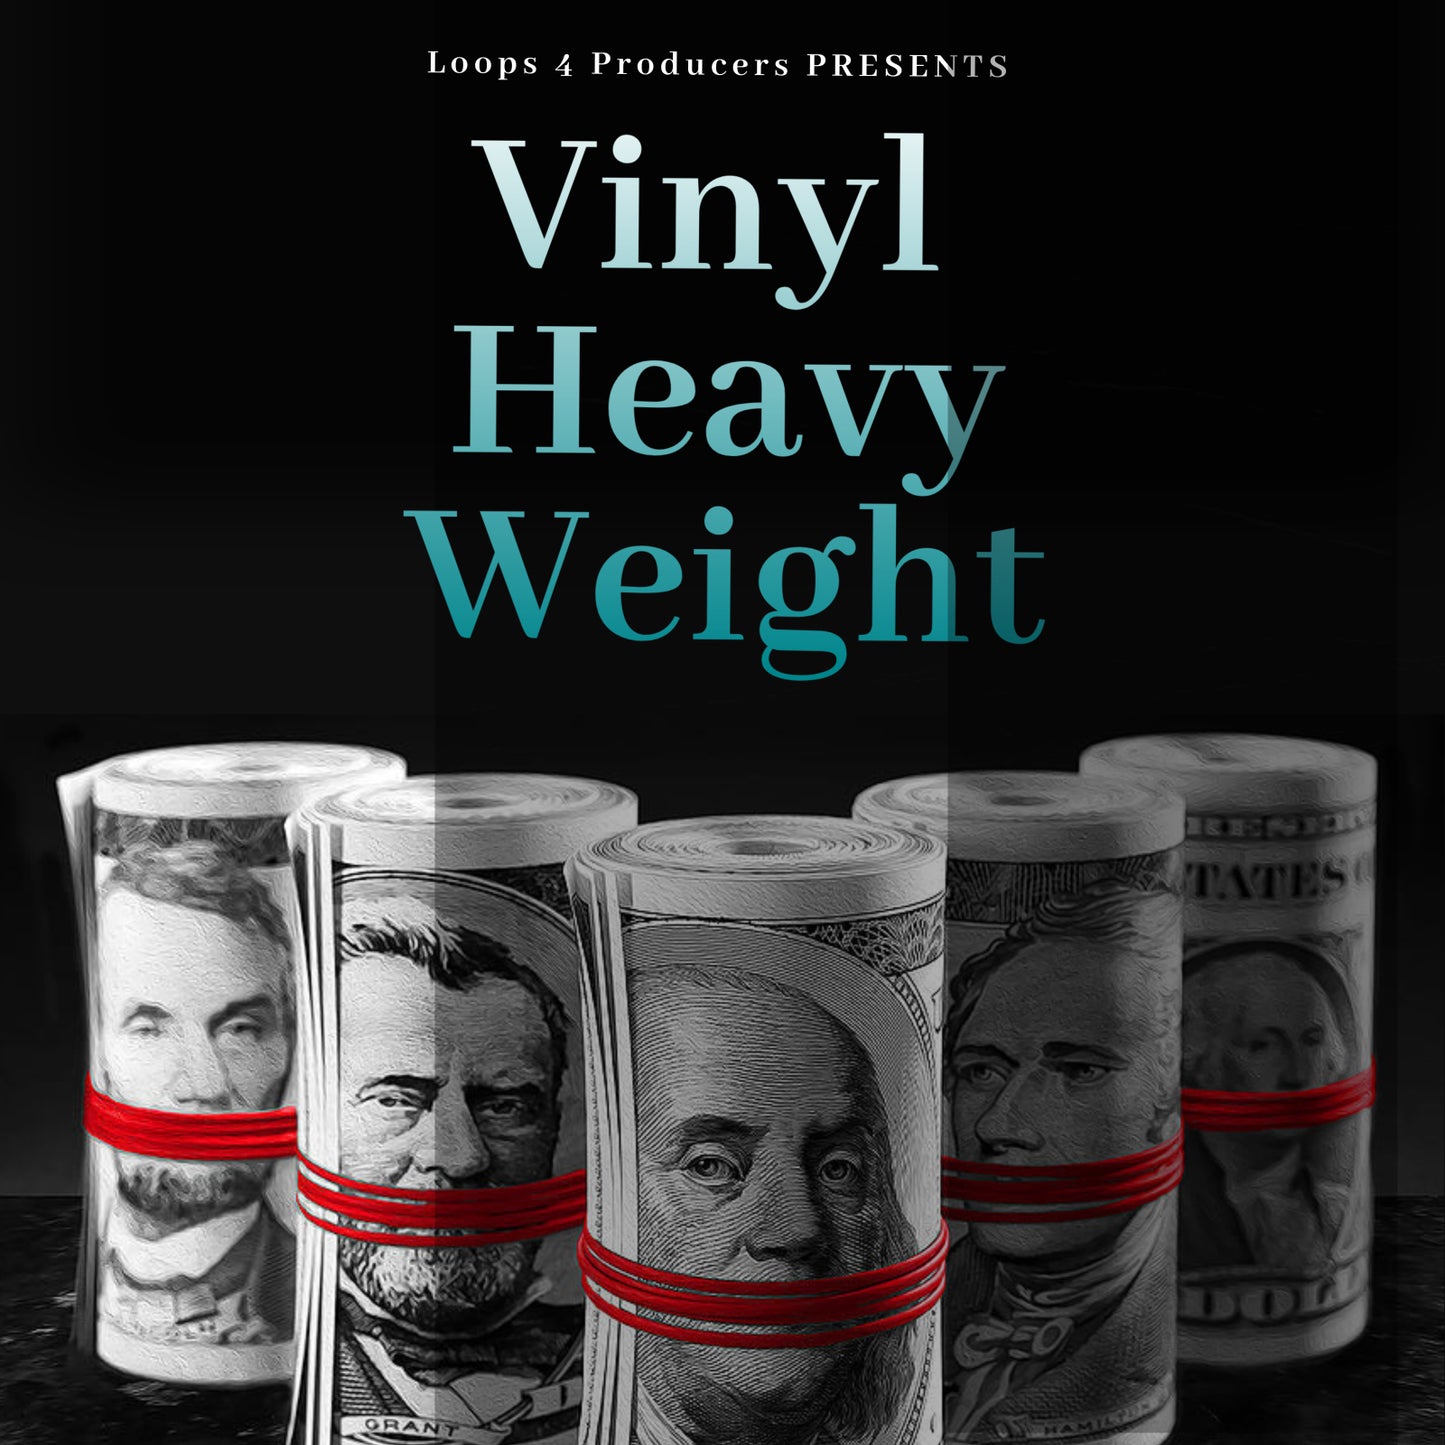 Vinyl Heavy Weight